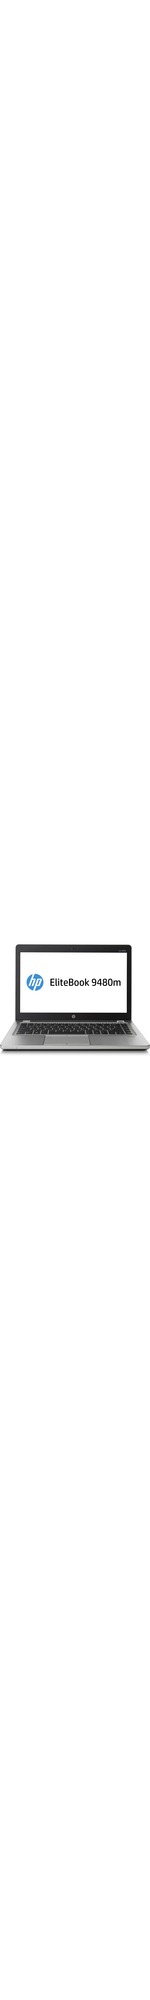 HP EliteBook Folio 9480m 35.6 cm 14And#34; LED Notebook - Intel Core i5 i5-4310U 2 GHz